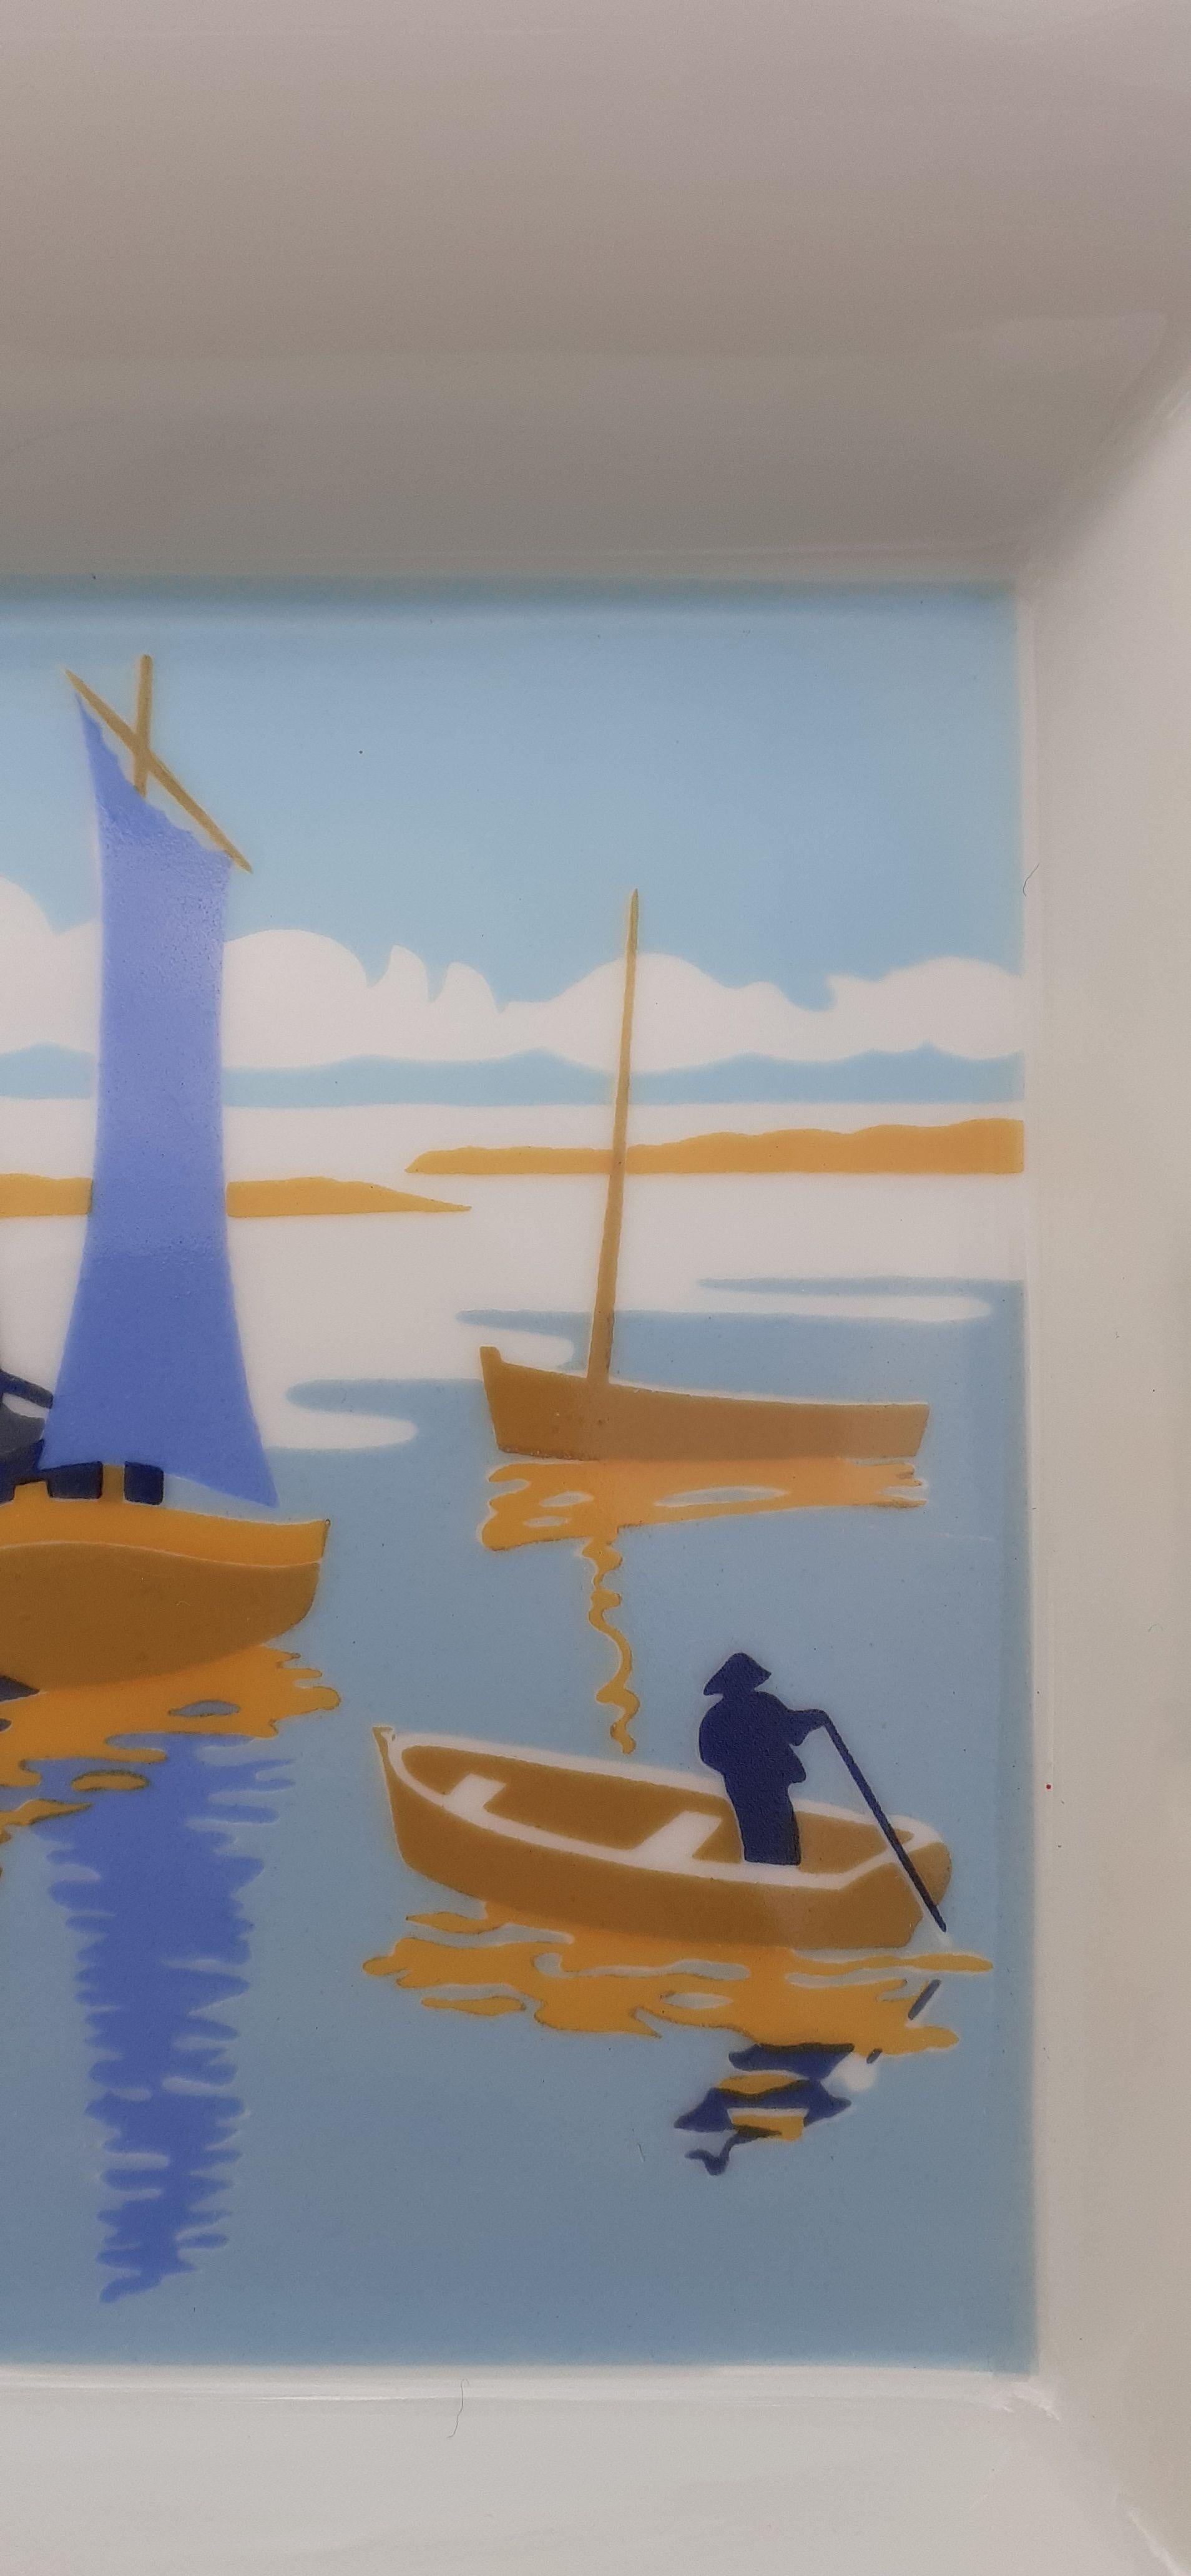 Women's or Men's Hermès Cigar Ashtray Change Tray Small Boats Sailing Ships Print in Porcelain